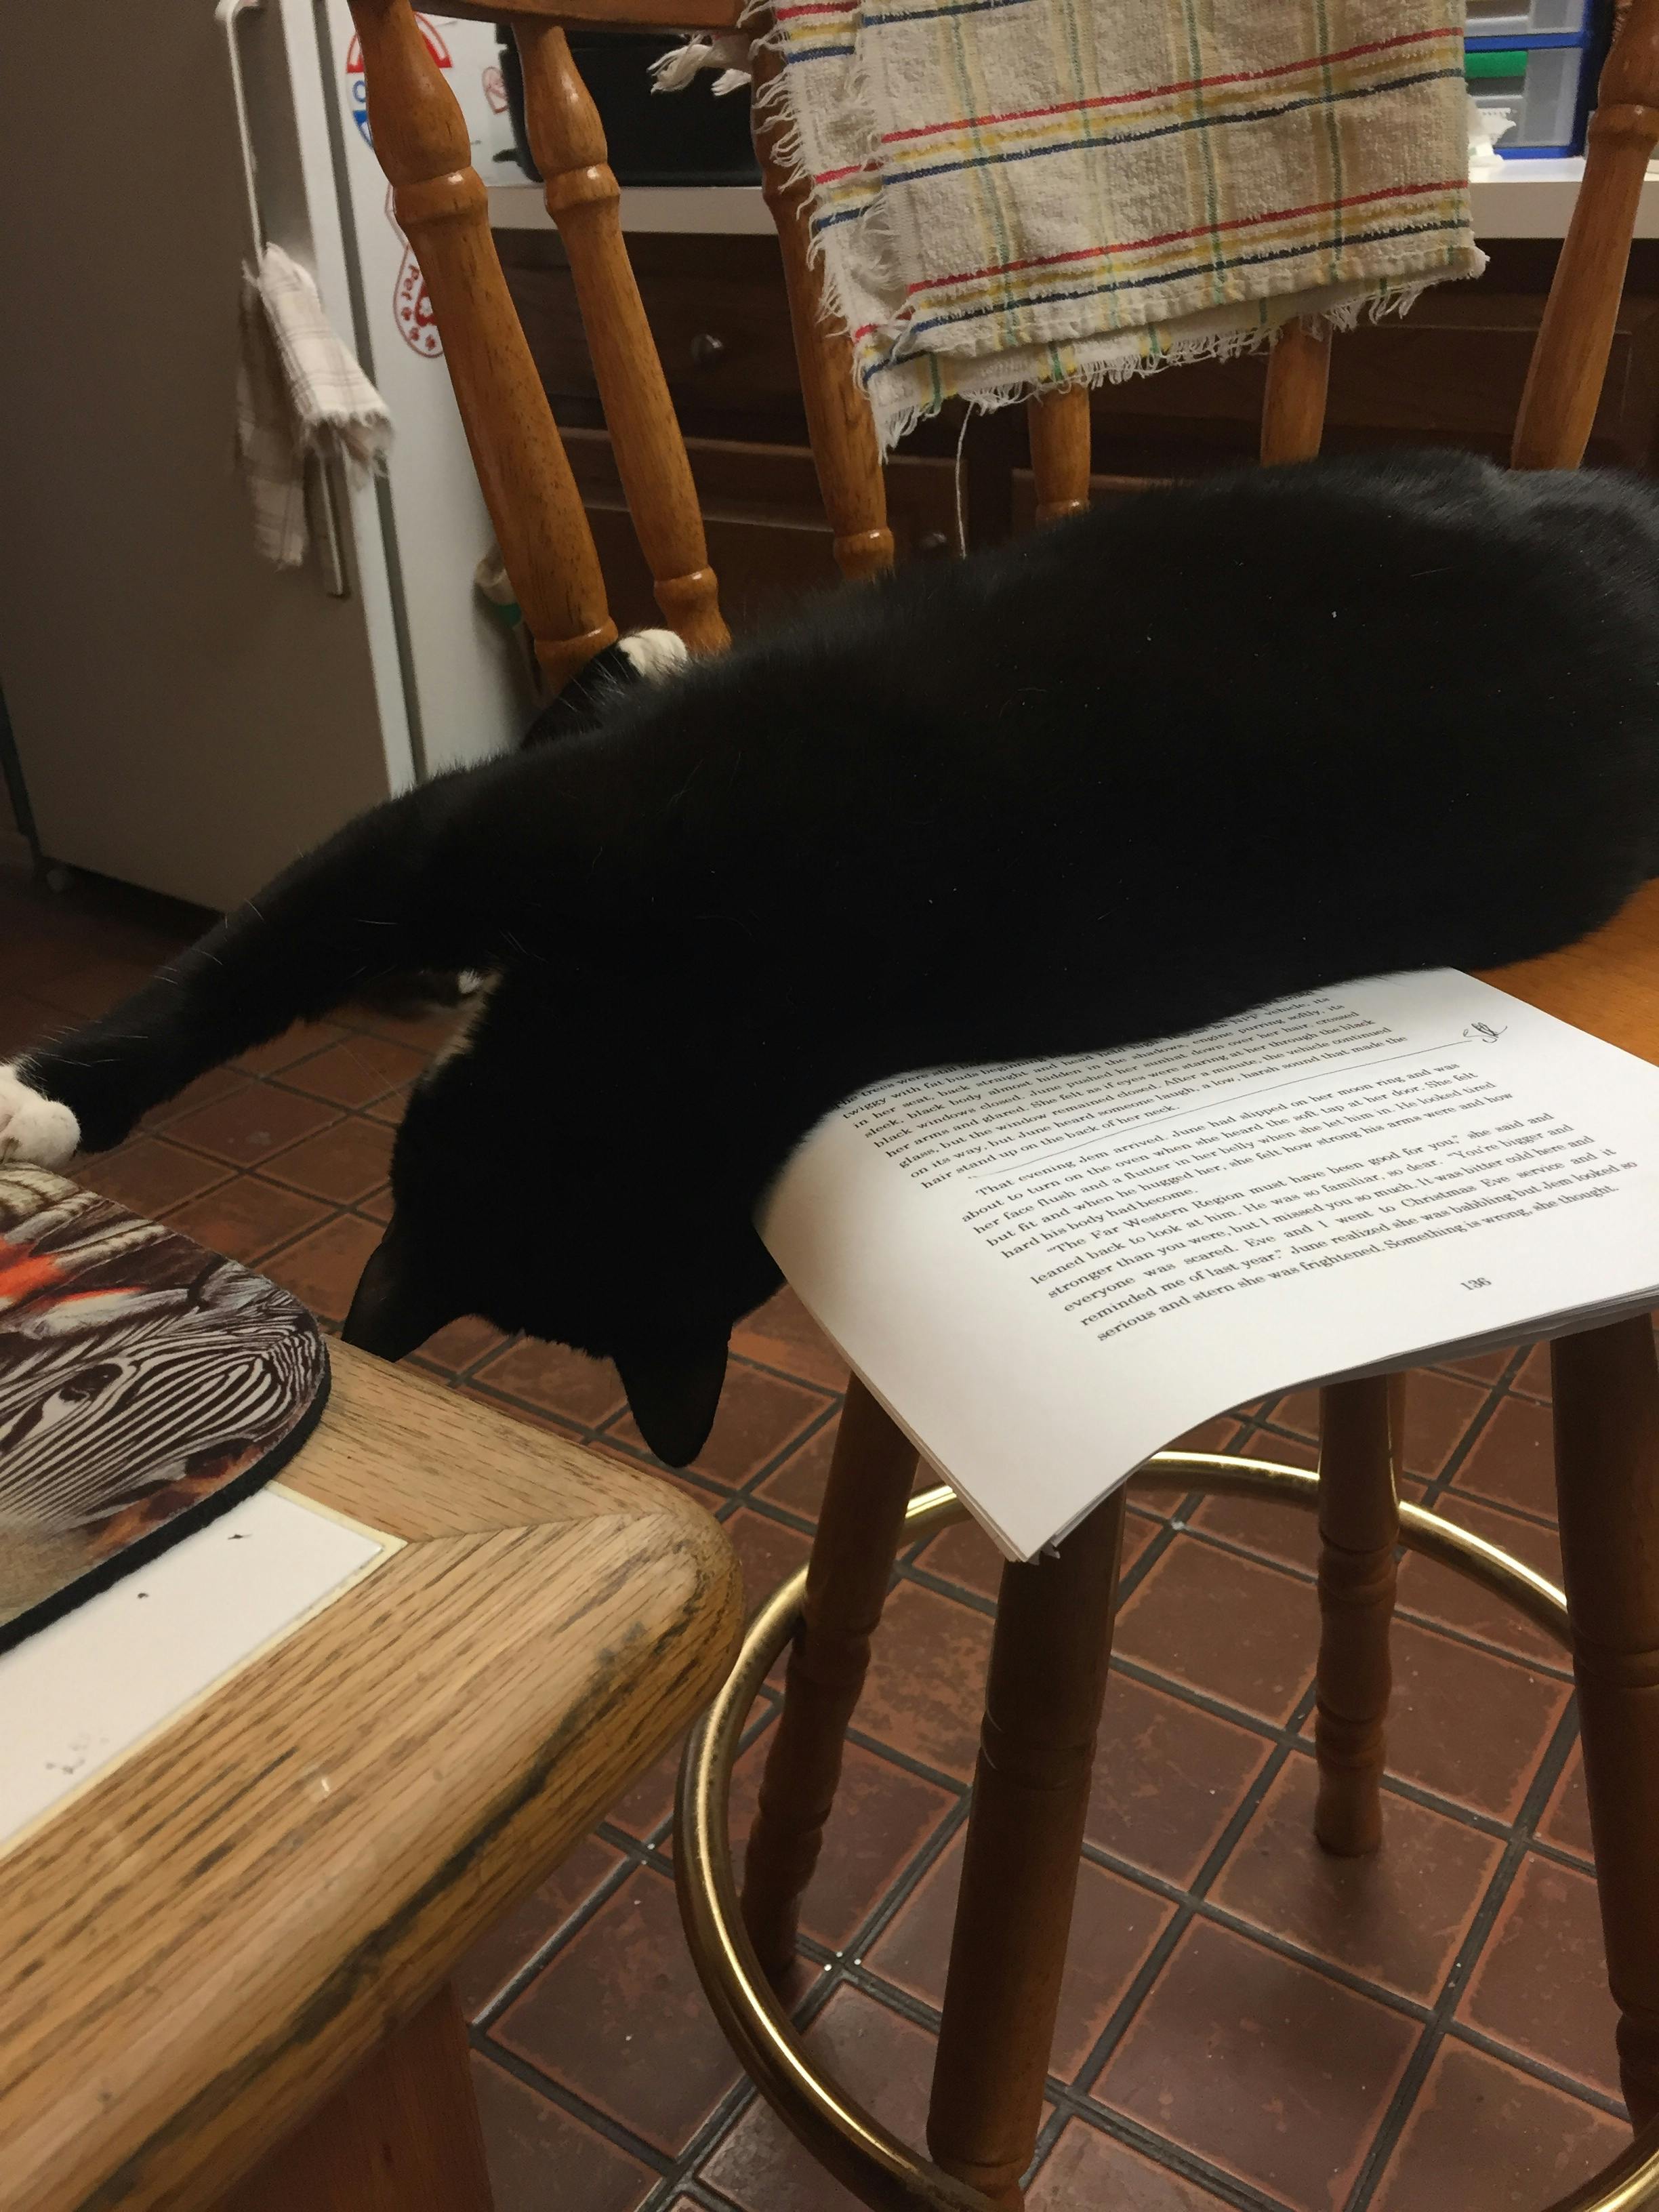 Free stock photo of Writer's Block. Tuxedo Cats